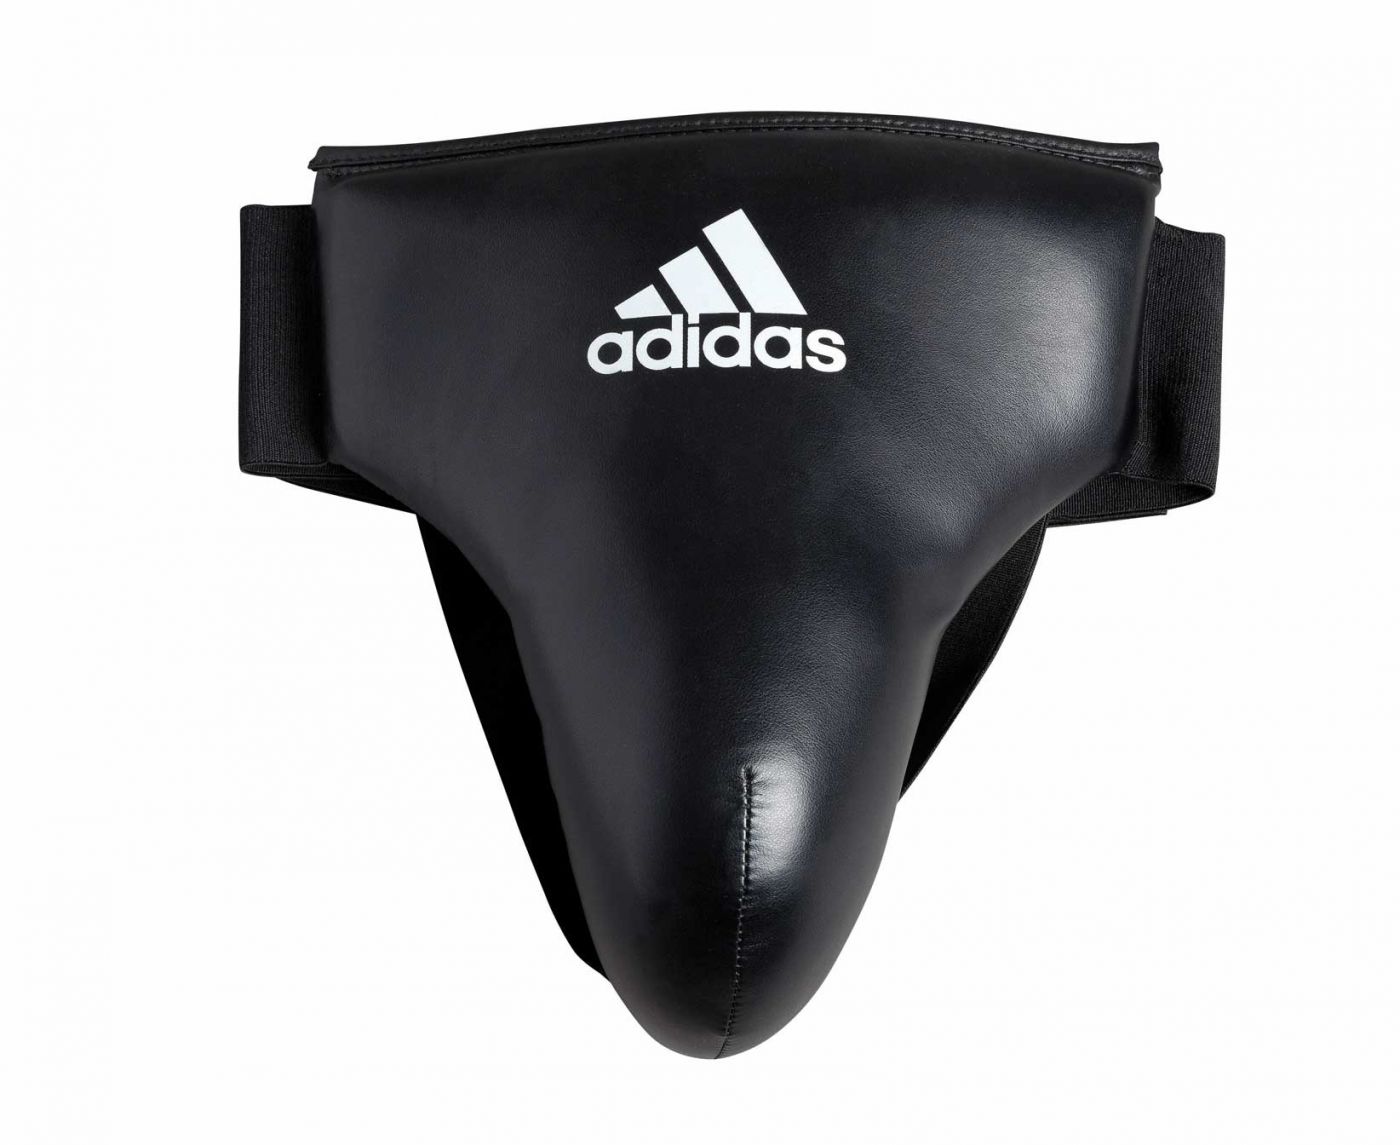 Защита паха Adidas мужская Anatomical Groin Guard черная, размер S, артикул adiBP05